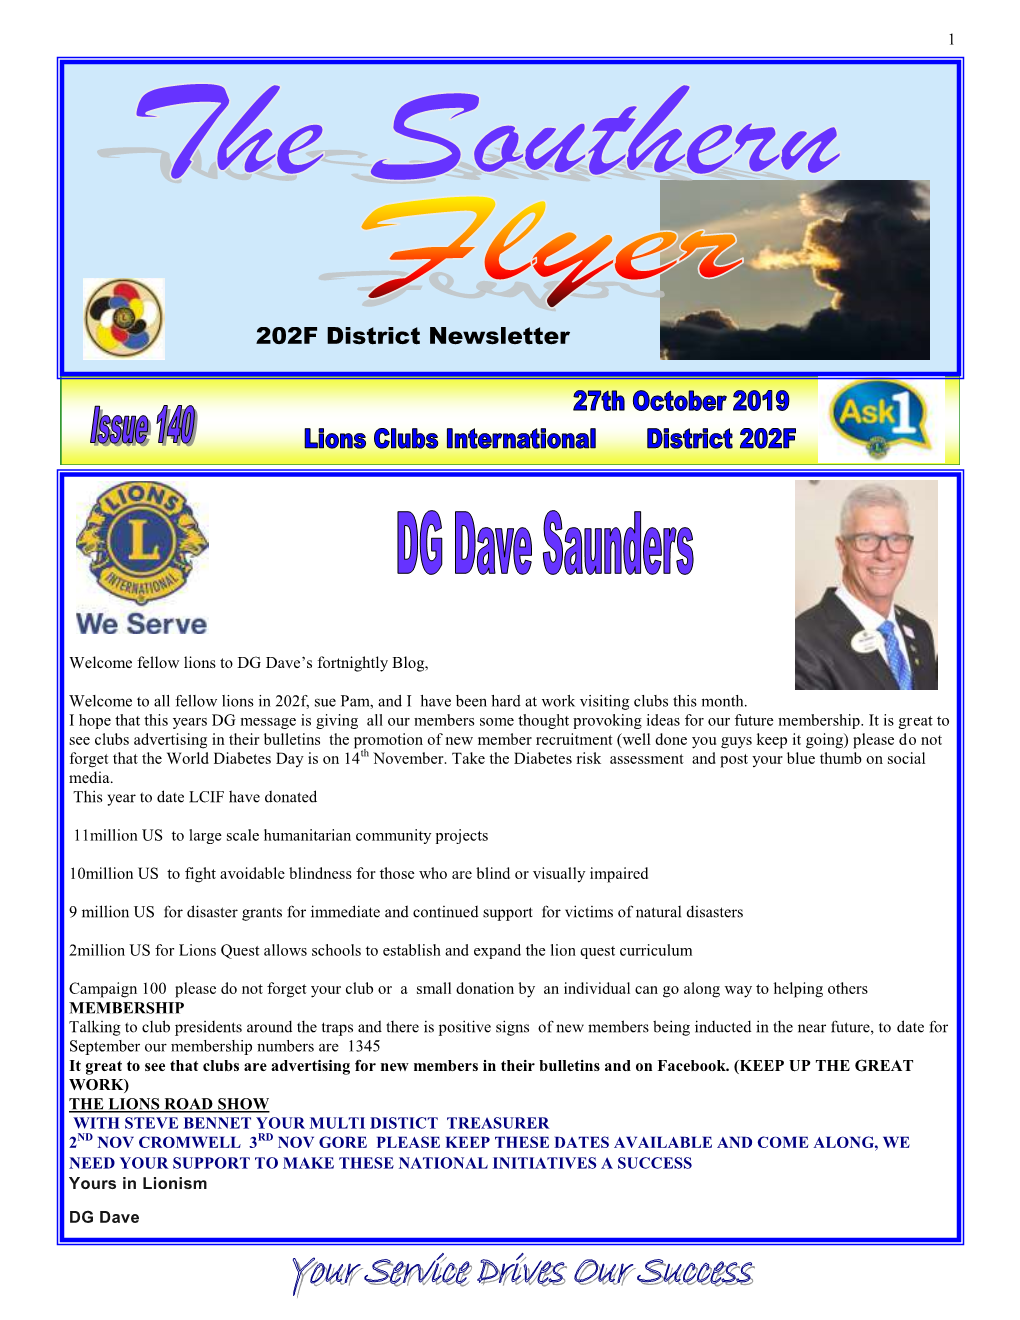 202F District Newsletter